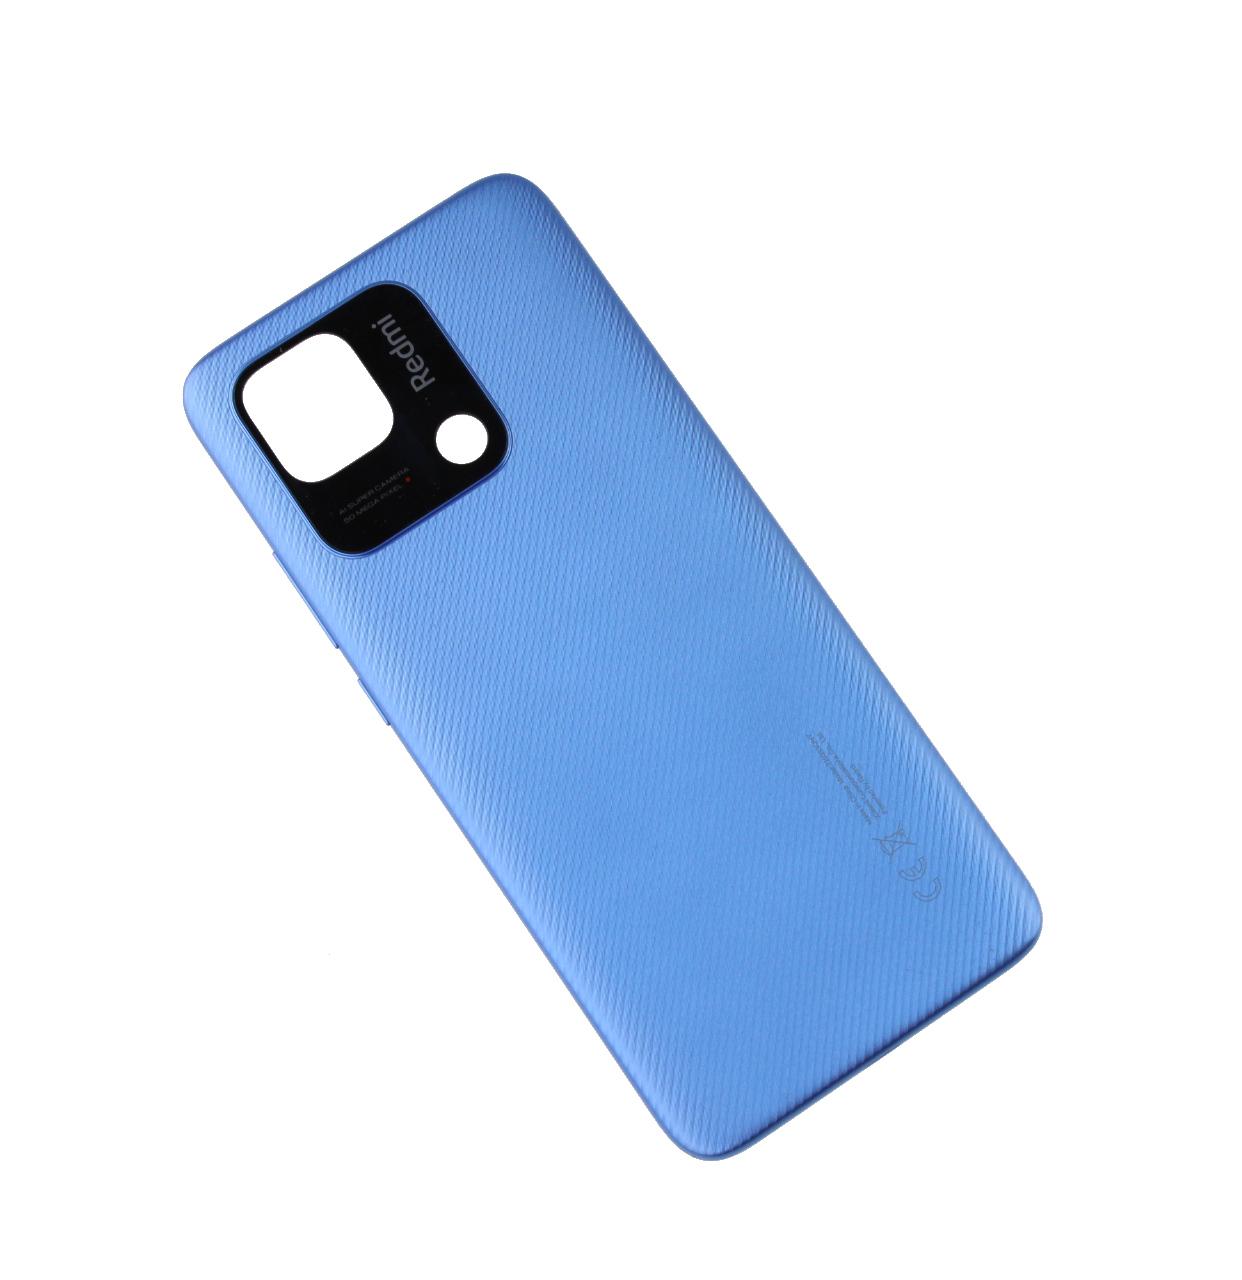 Originál kry baterie Xiaomi Remi 10C modrý - demontovaný díl